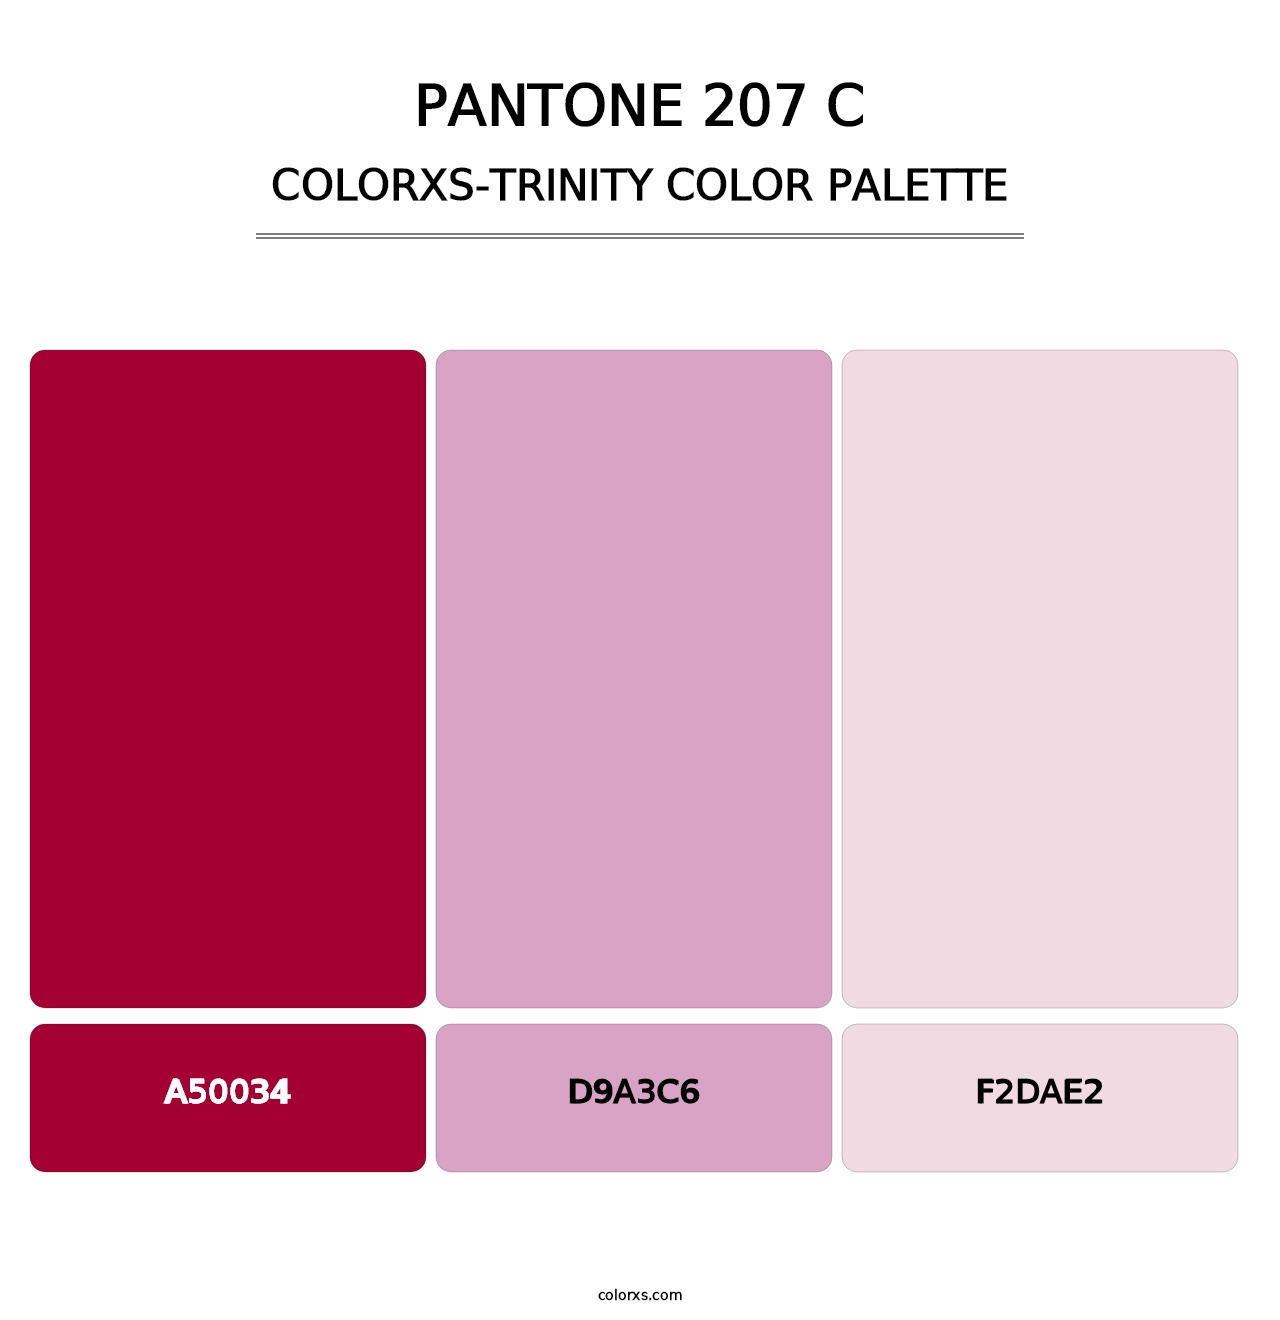 PANTONE 207 C - Colorxs Trinity Palette